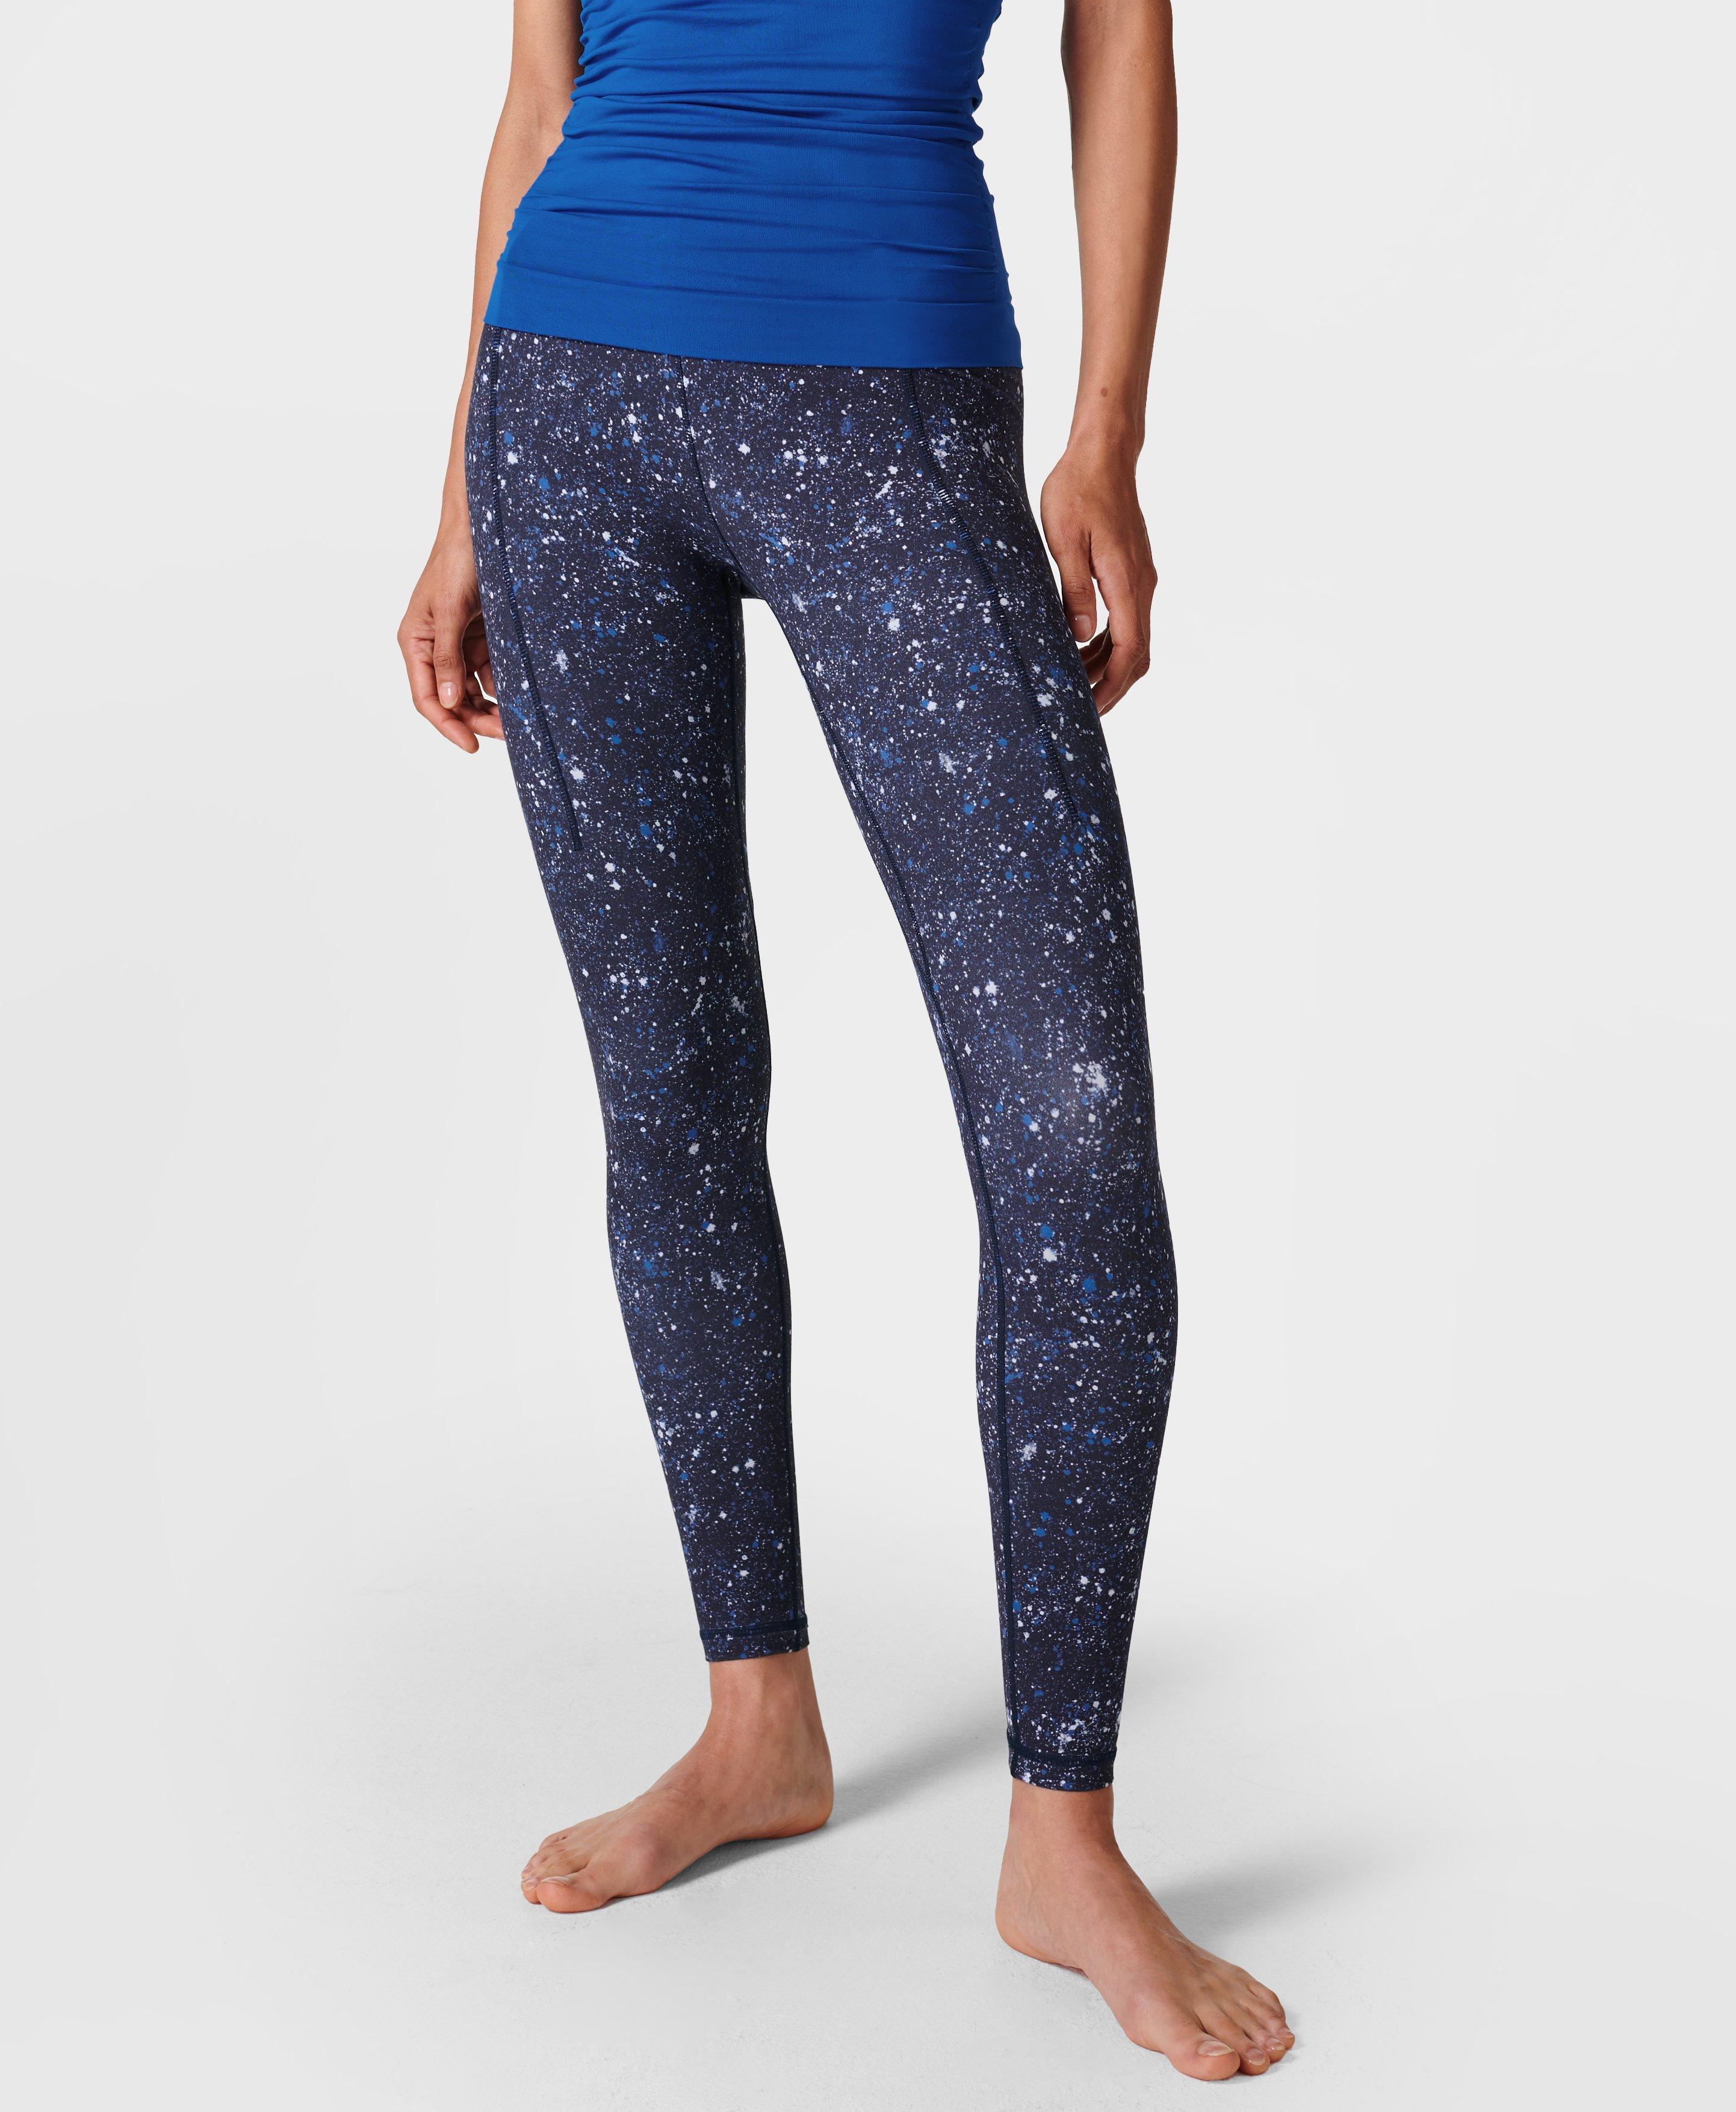 Super Soft Yoga Leggings - Blue Multi Speckle Print